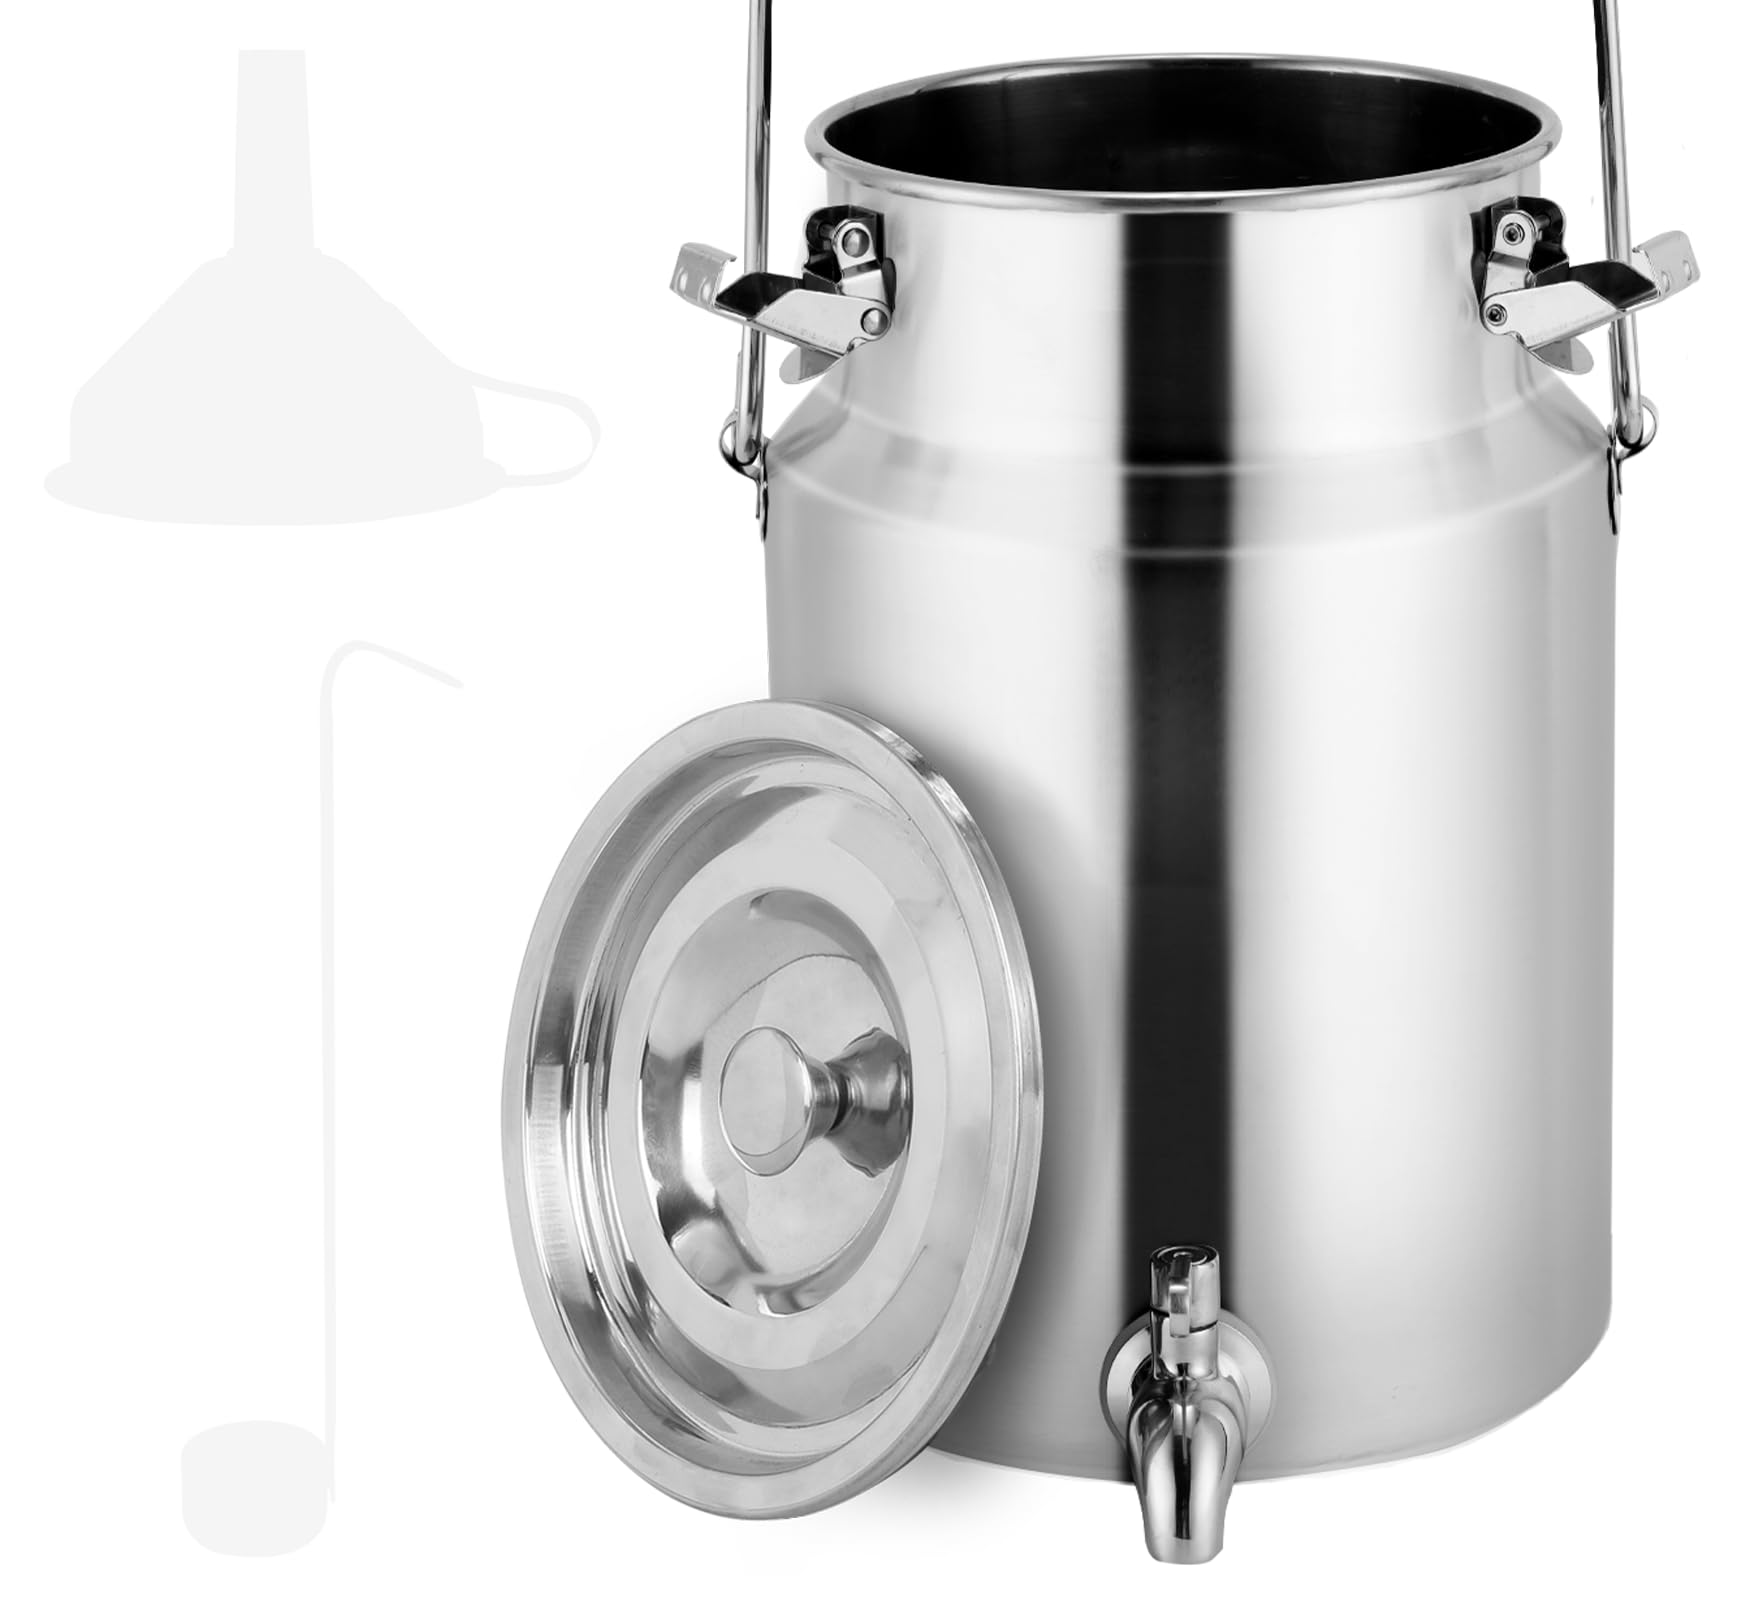 YMJOINMX 304 Stainless Steel Milk Can with Spigot 1.3 Gallon 5 Liter Metal Water Beverage Drink Dispenser Milk Pail Bucket for Milk Wine Oil